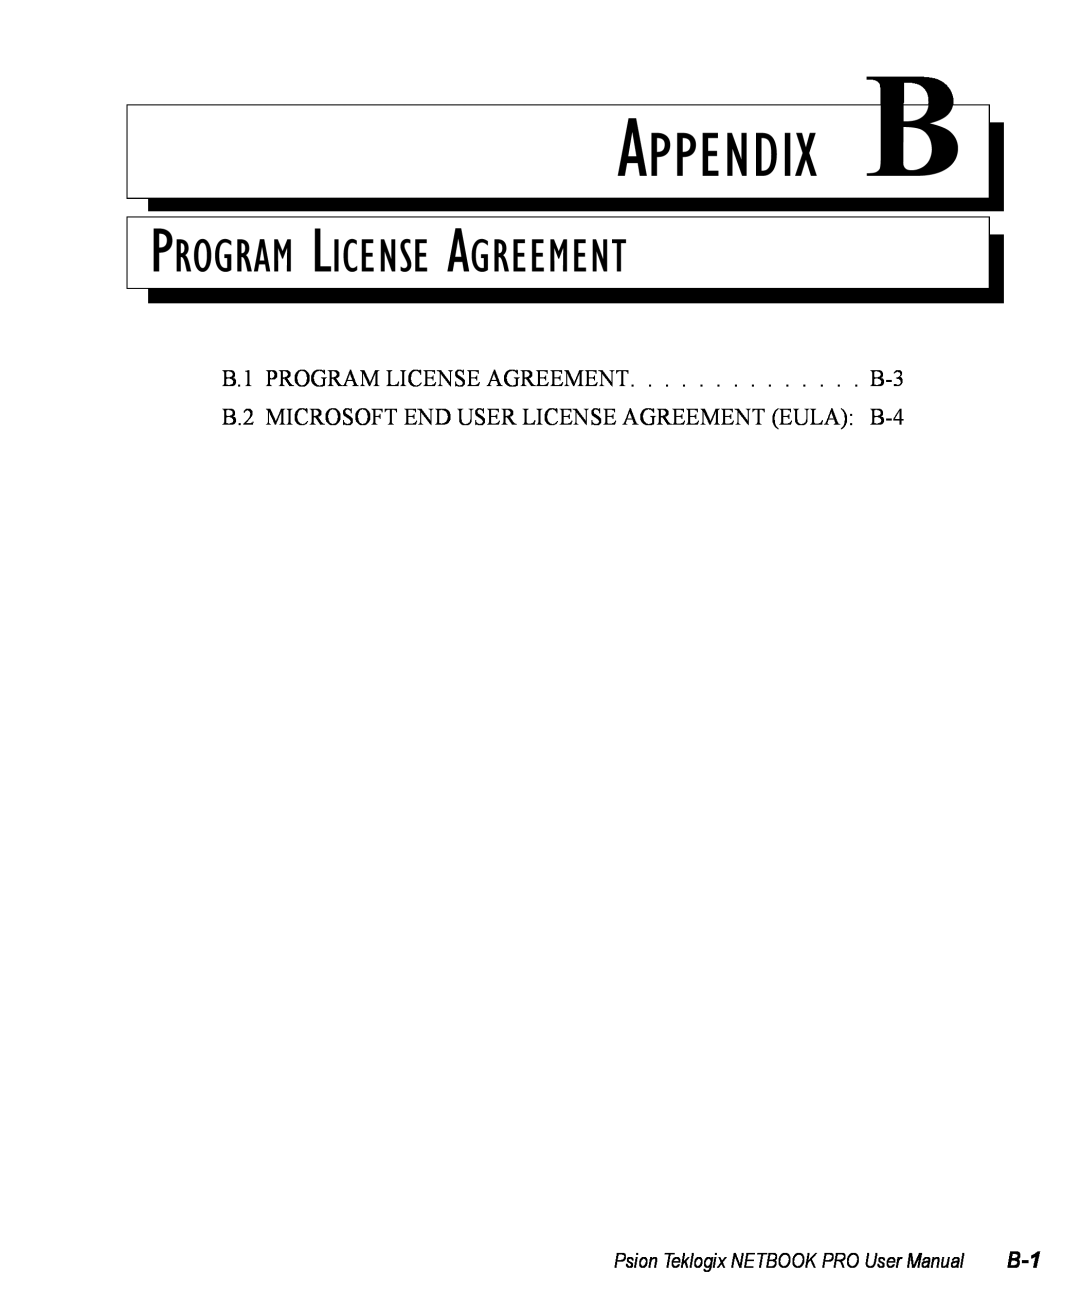 Psion Teklogix Win CE 4.2 user manual Program License Agreement, Appendix B, Psion Teklogix NETBOOK PRO User Manual 